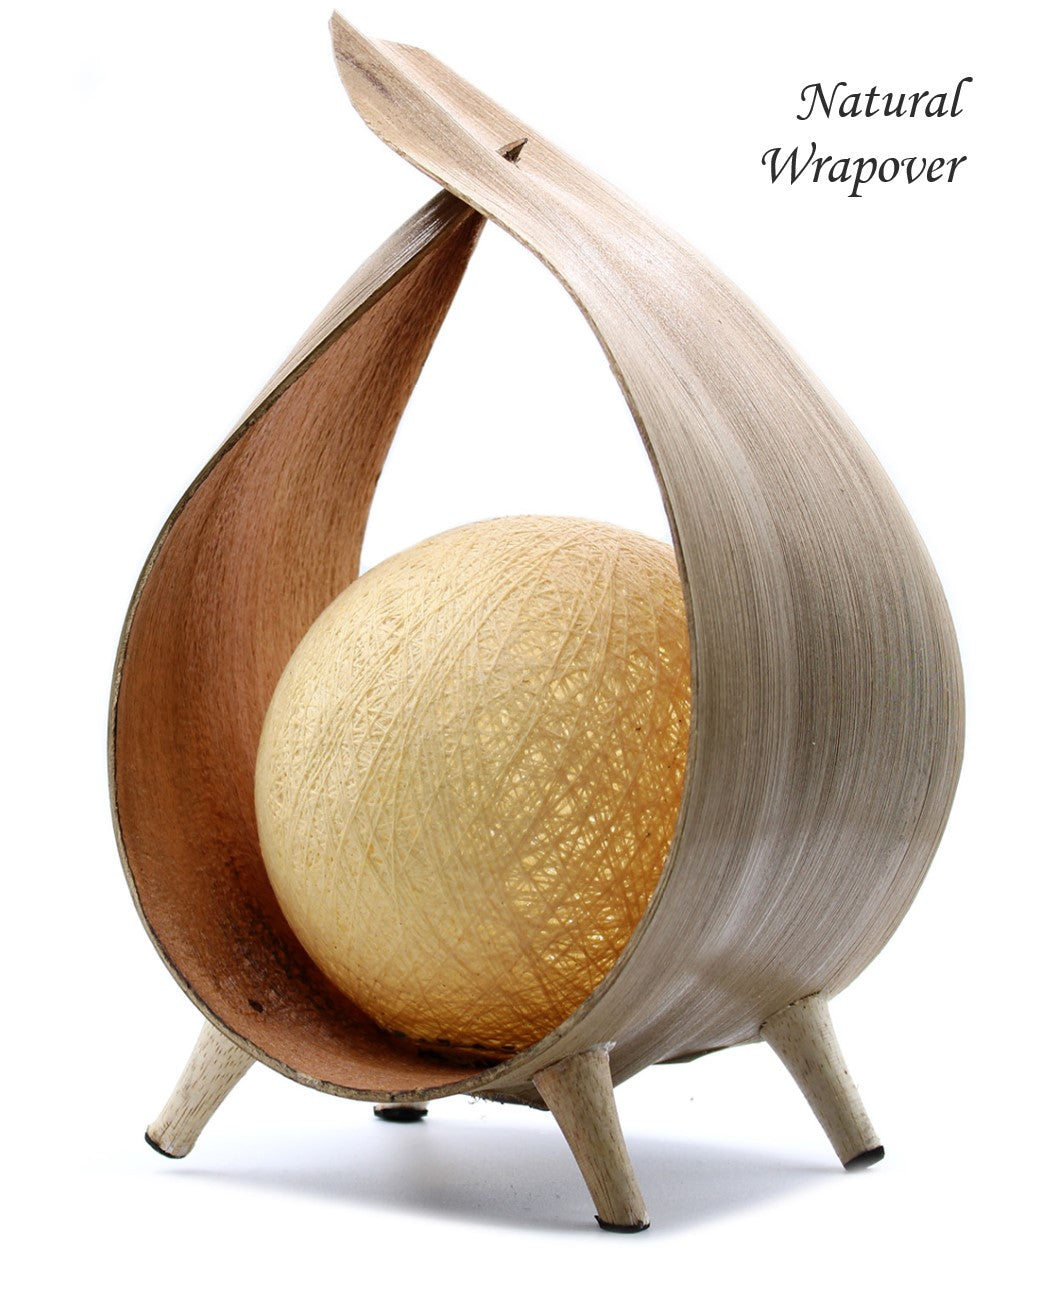 Coconut Lamp - 30cm tall - Handmade in Bali